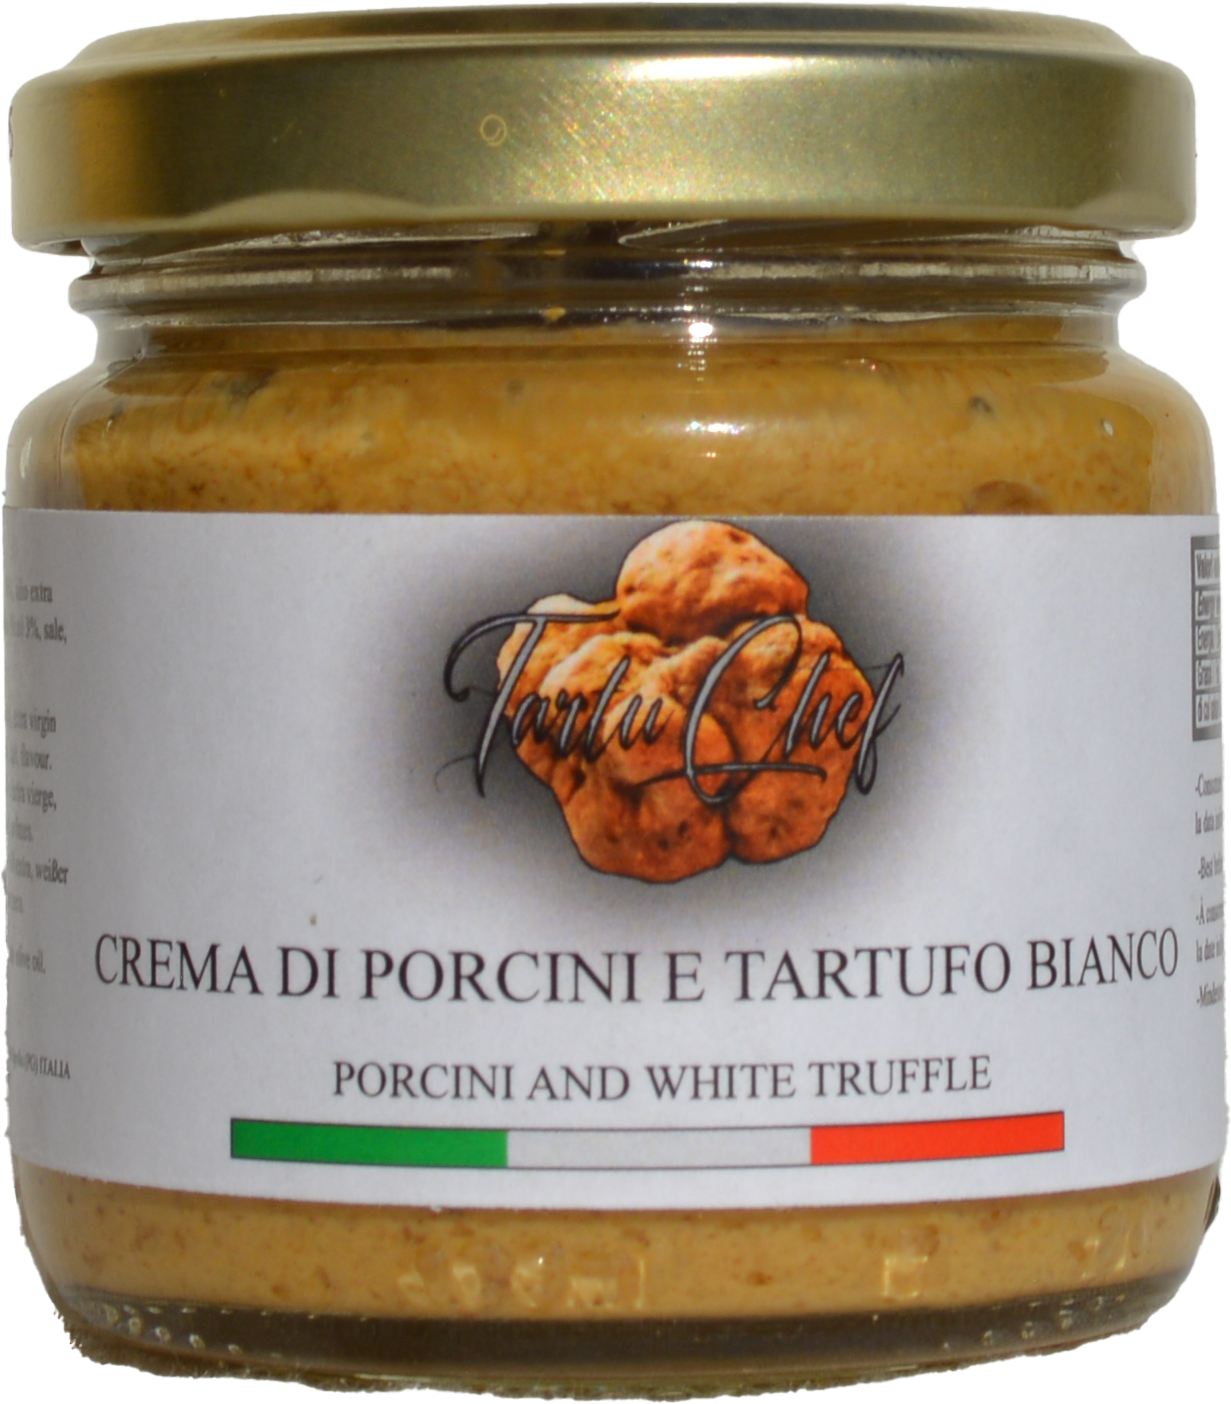 Porcini cream with white truffle